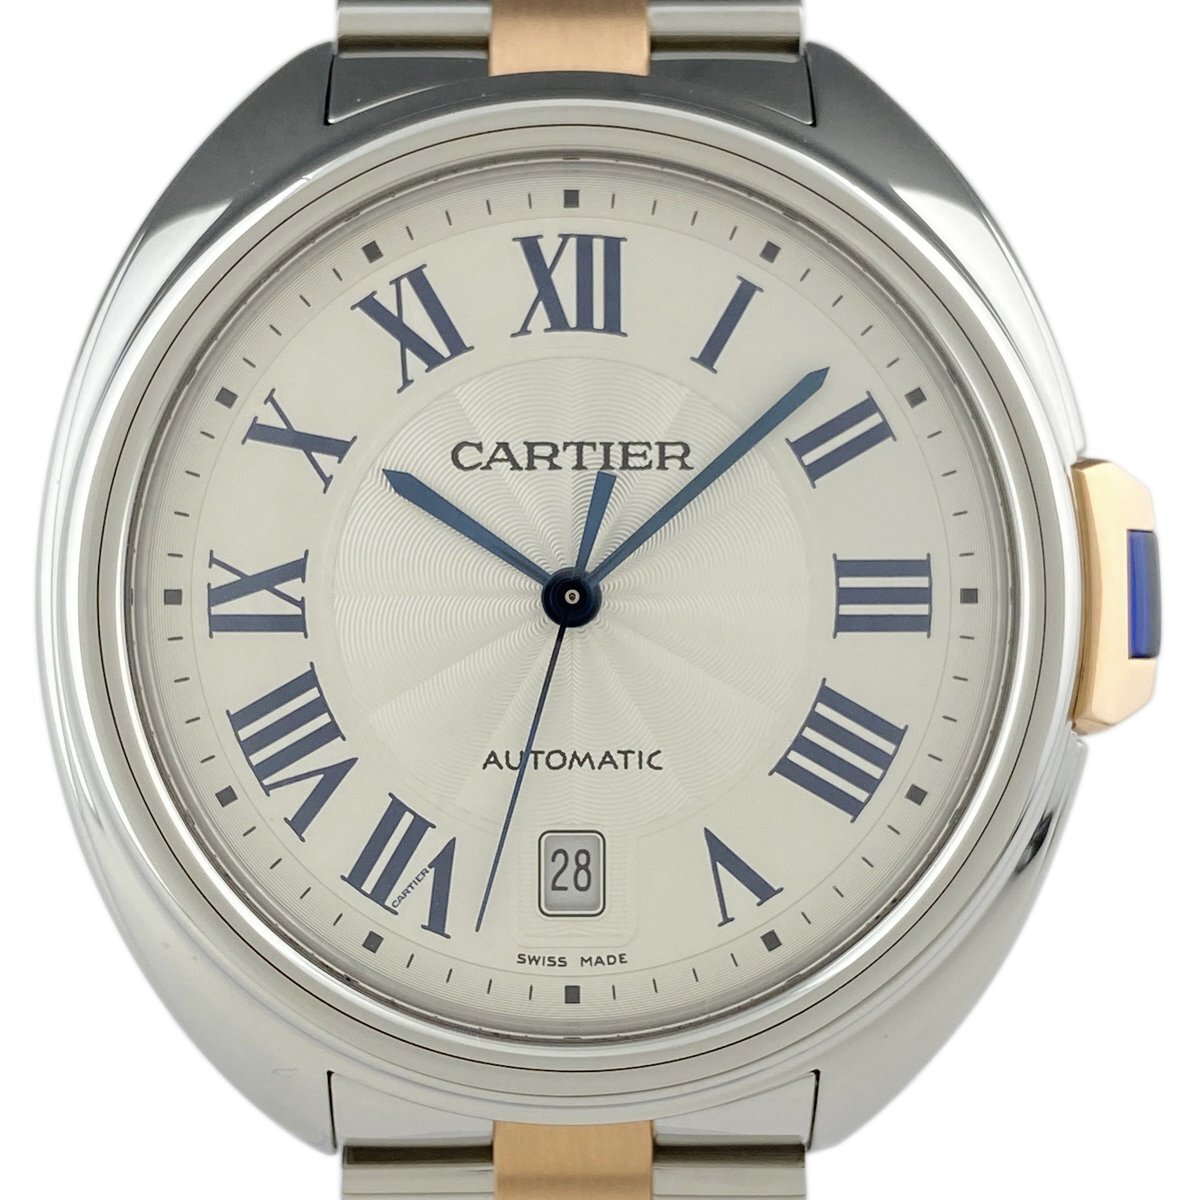  Cartier CARTIERkredu Rome nW2CL0002 wristwatch SS PG self-winding watch silver men's [ used ]